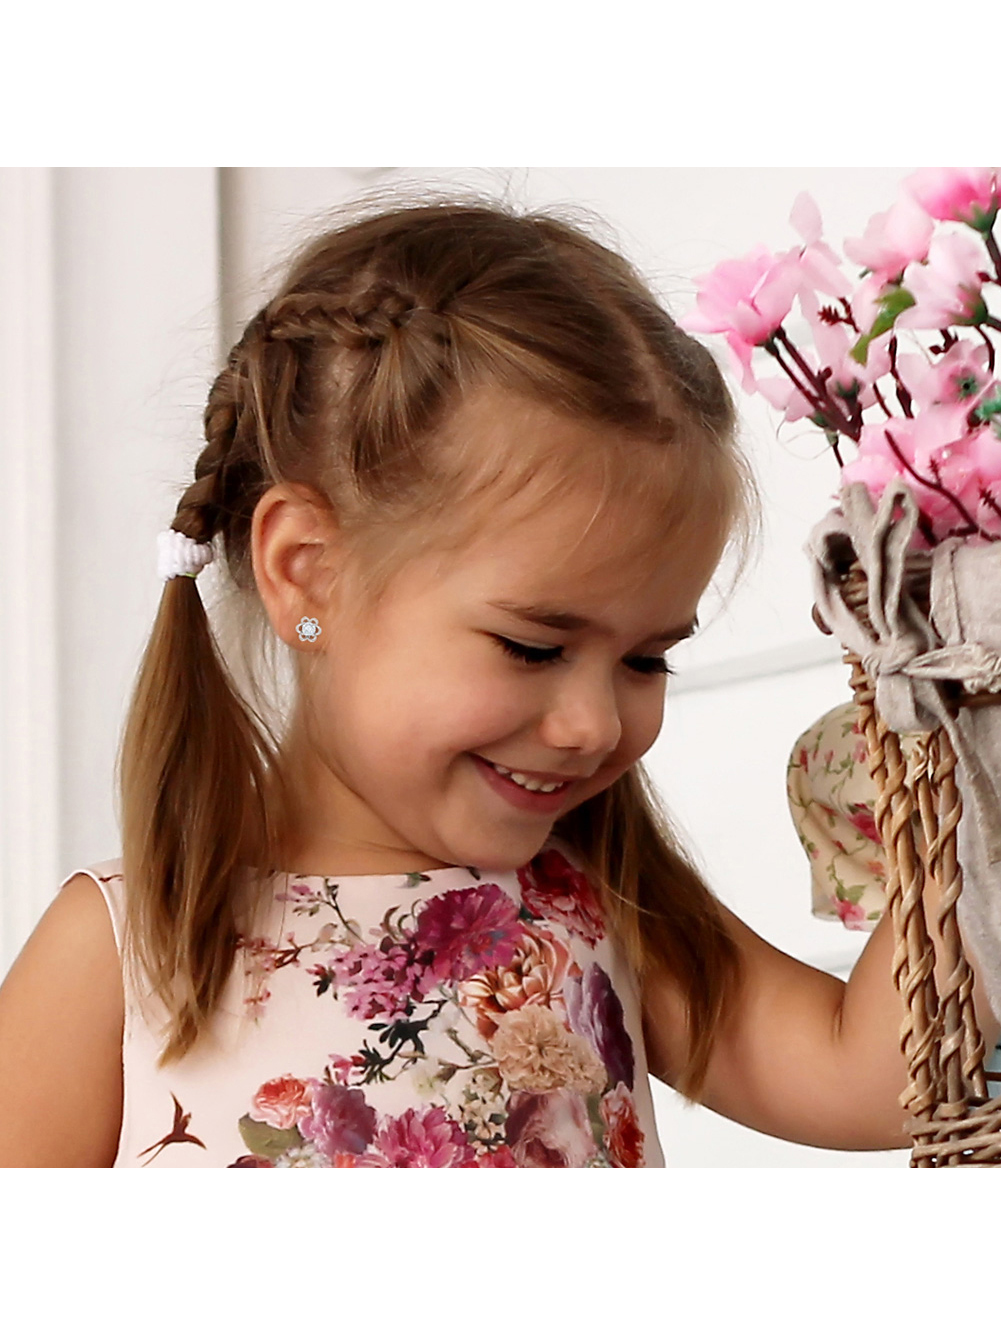 Fun Solitaire Flower Clear Kids / Girls Earrings Screw Back - Sterling Silver - image 3 of 7